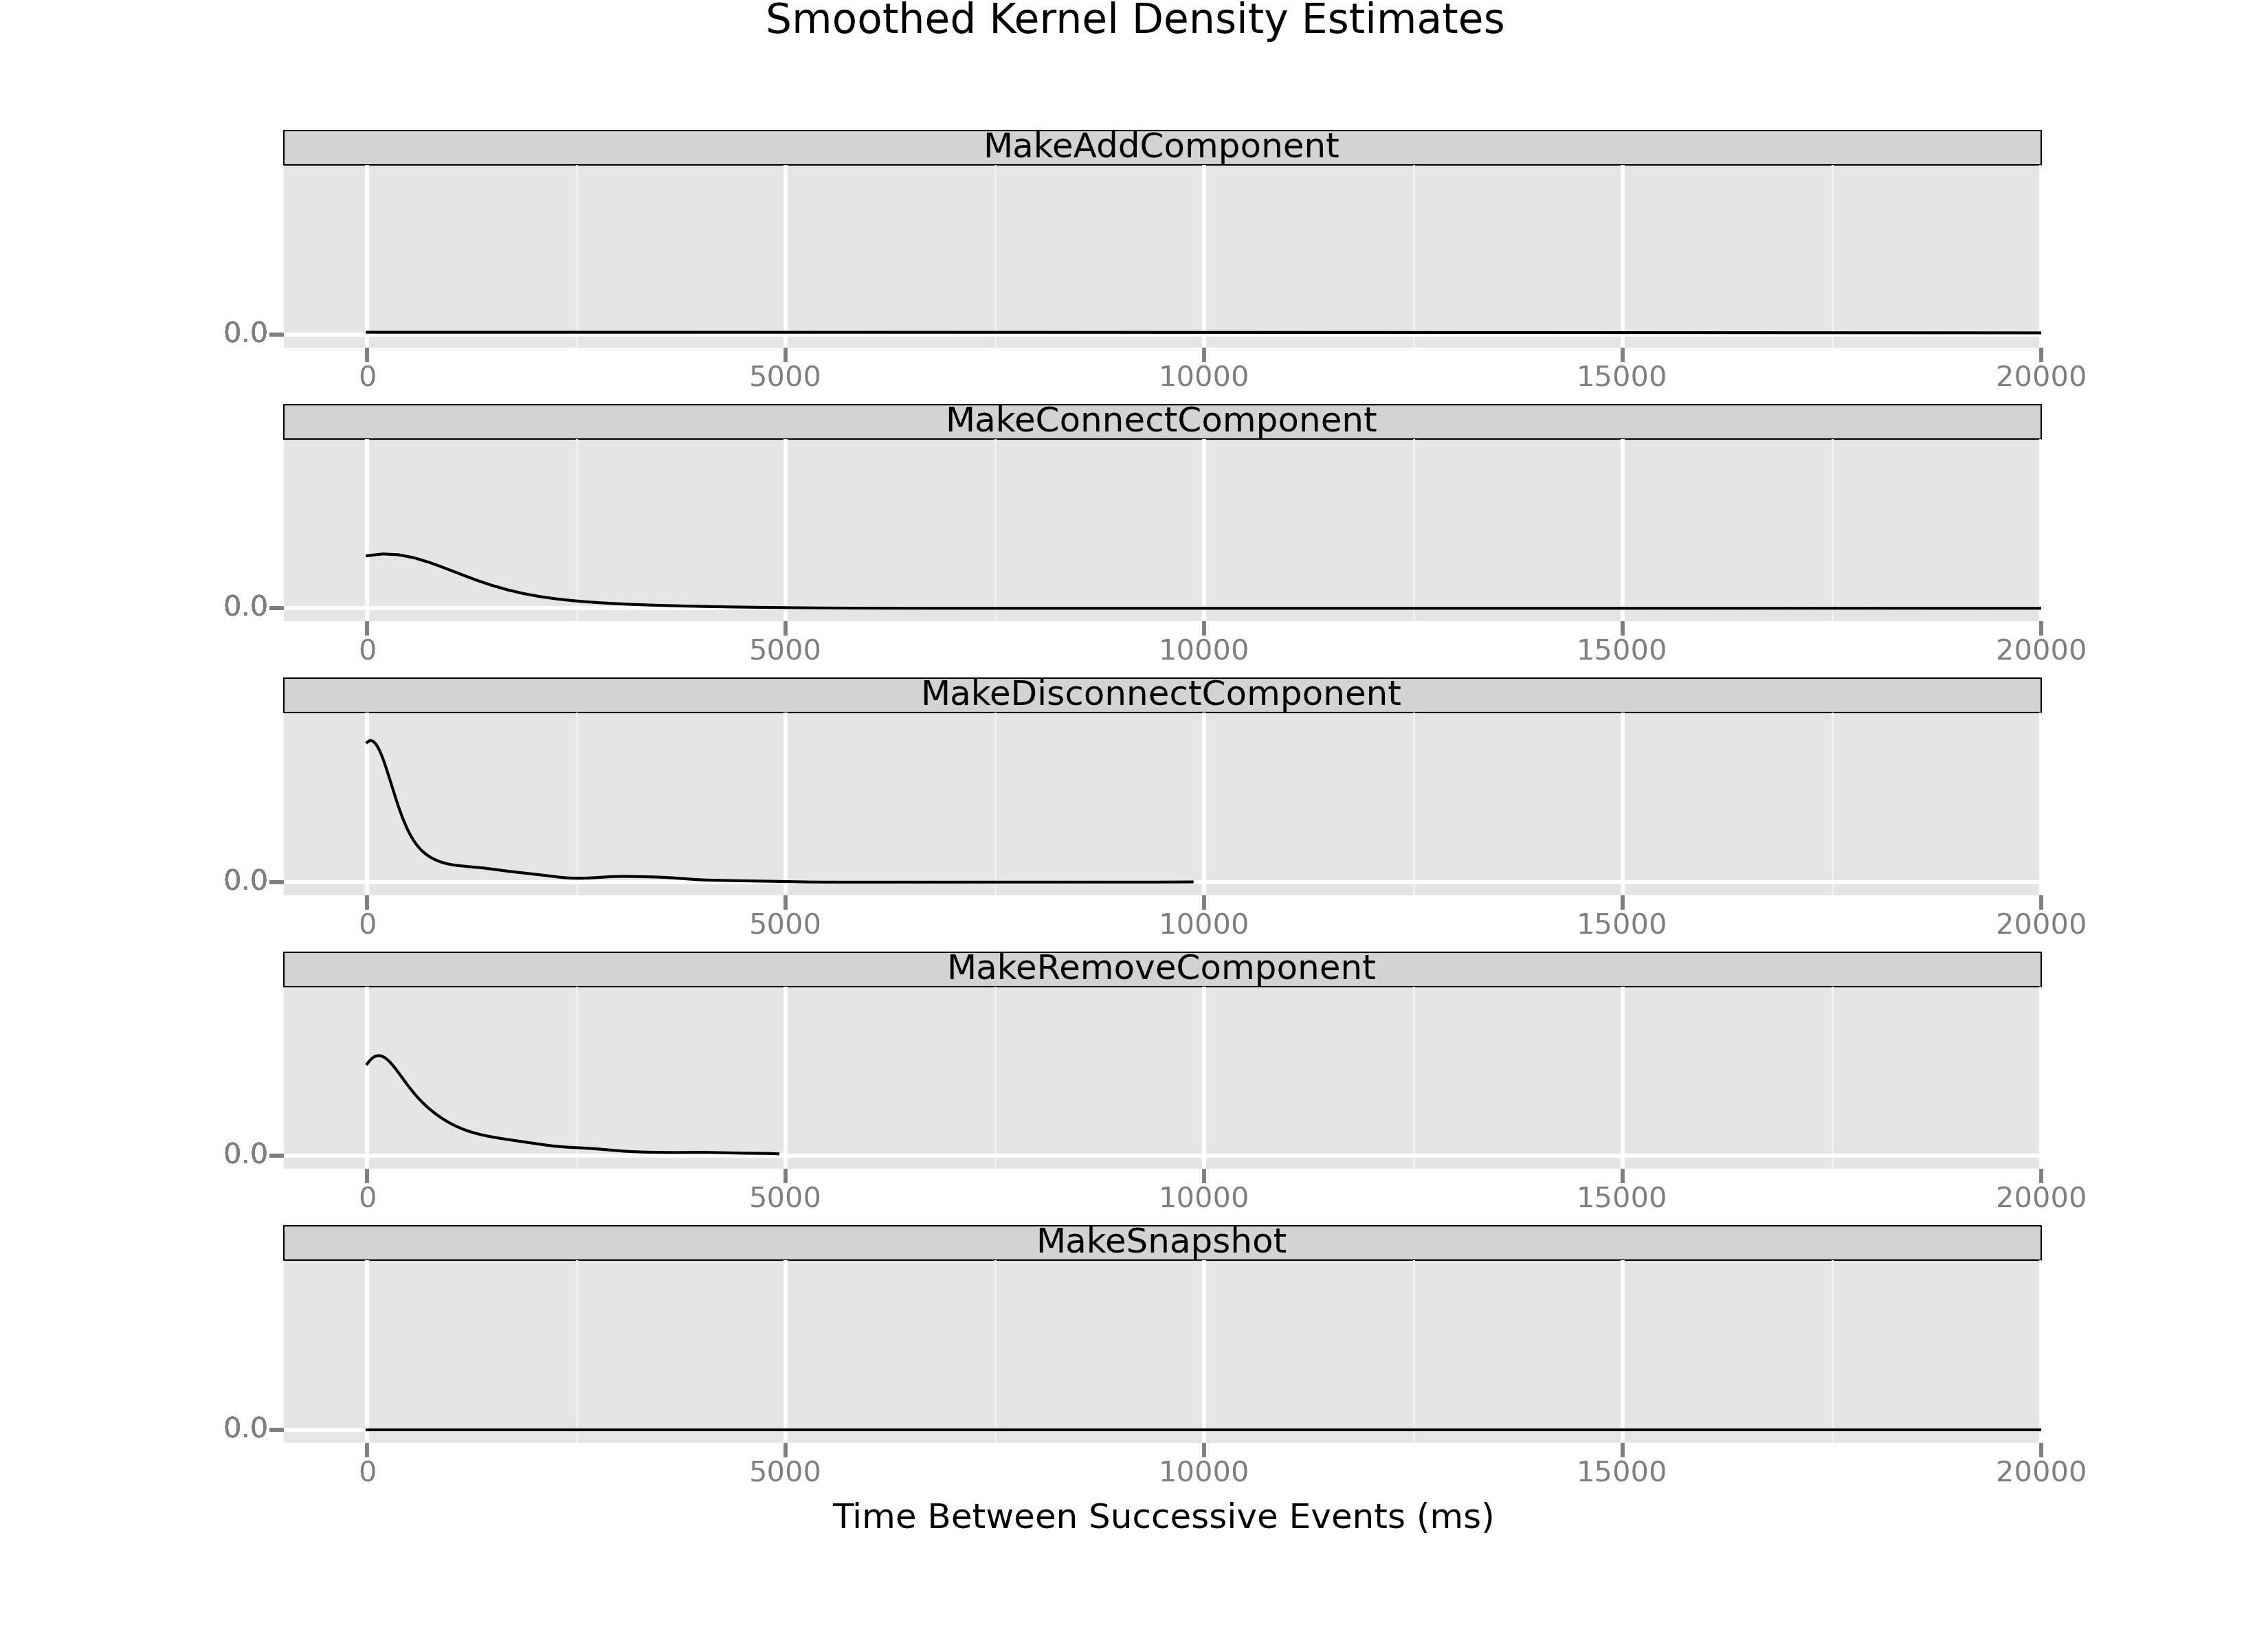 Small multiples of kernel density estimates